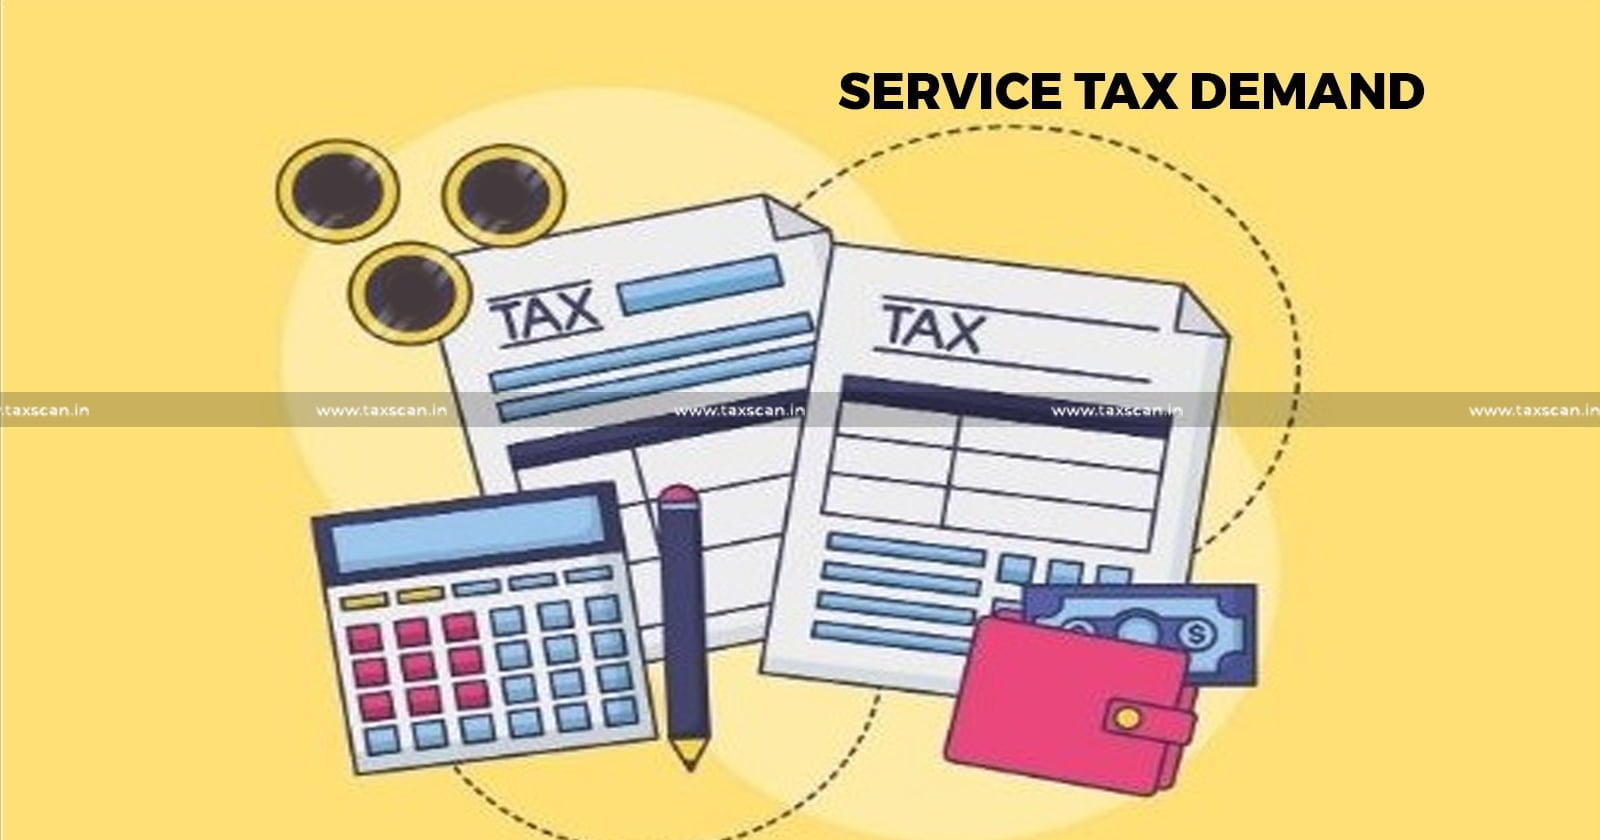 CESTAT quashes Service Tax Demand - Service Tax Demand - CESTAT - Manpower Recruitment - Manpower Recruitment and Supply Services - Supply Services - Piece-Rate Basis - Service Tax - taxscan